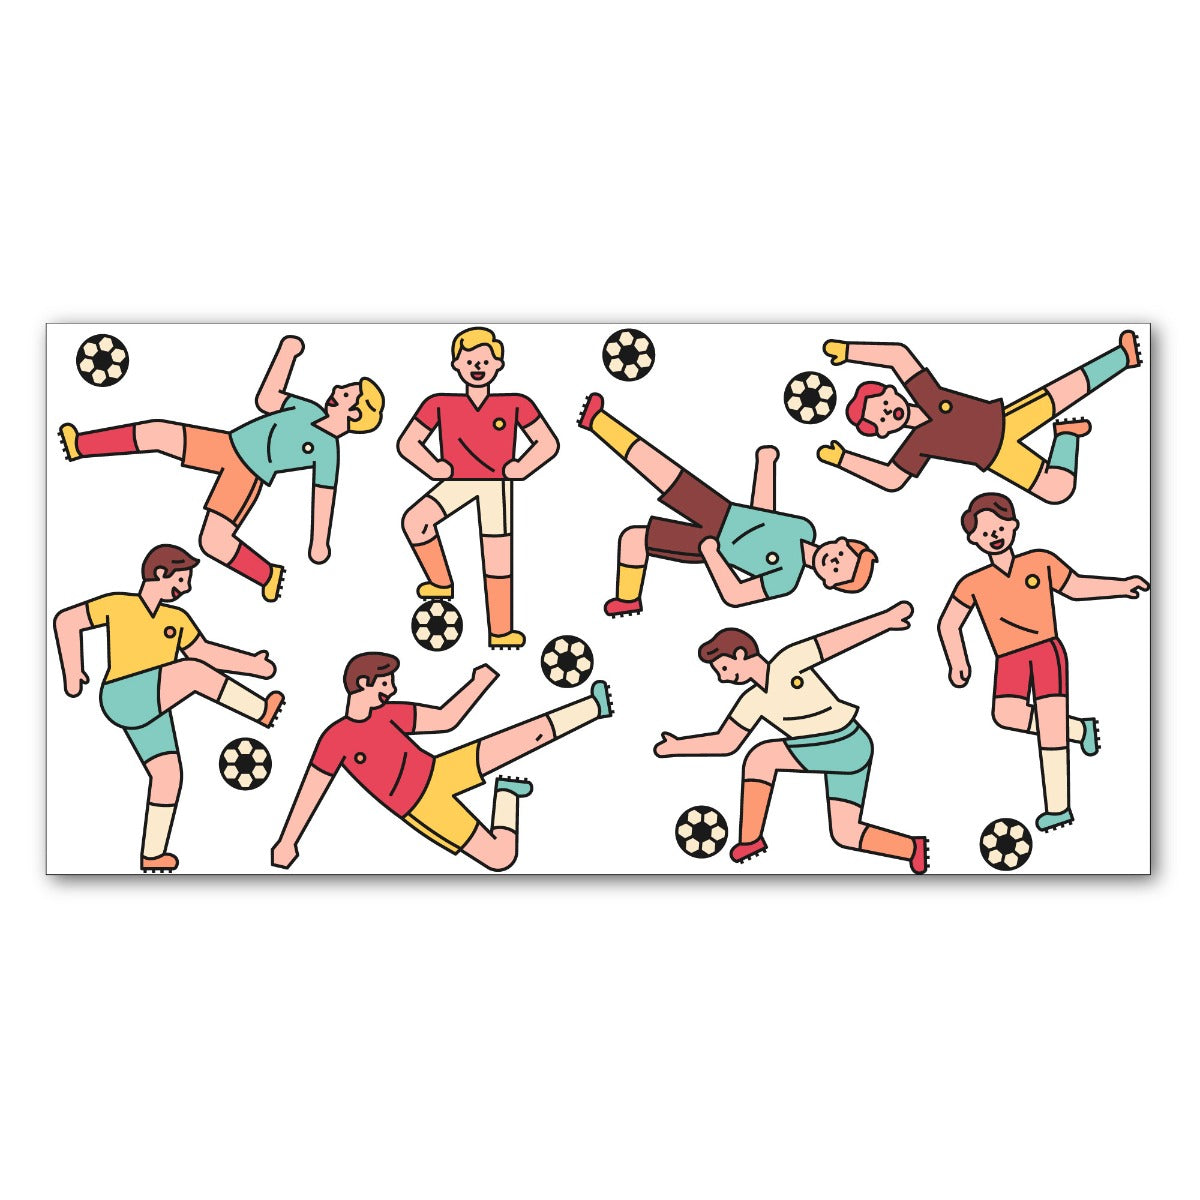 Football Wall Sticker - Cartoon Football Players